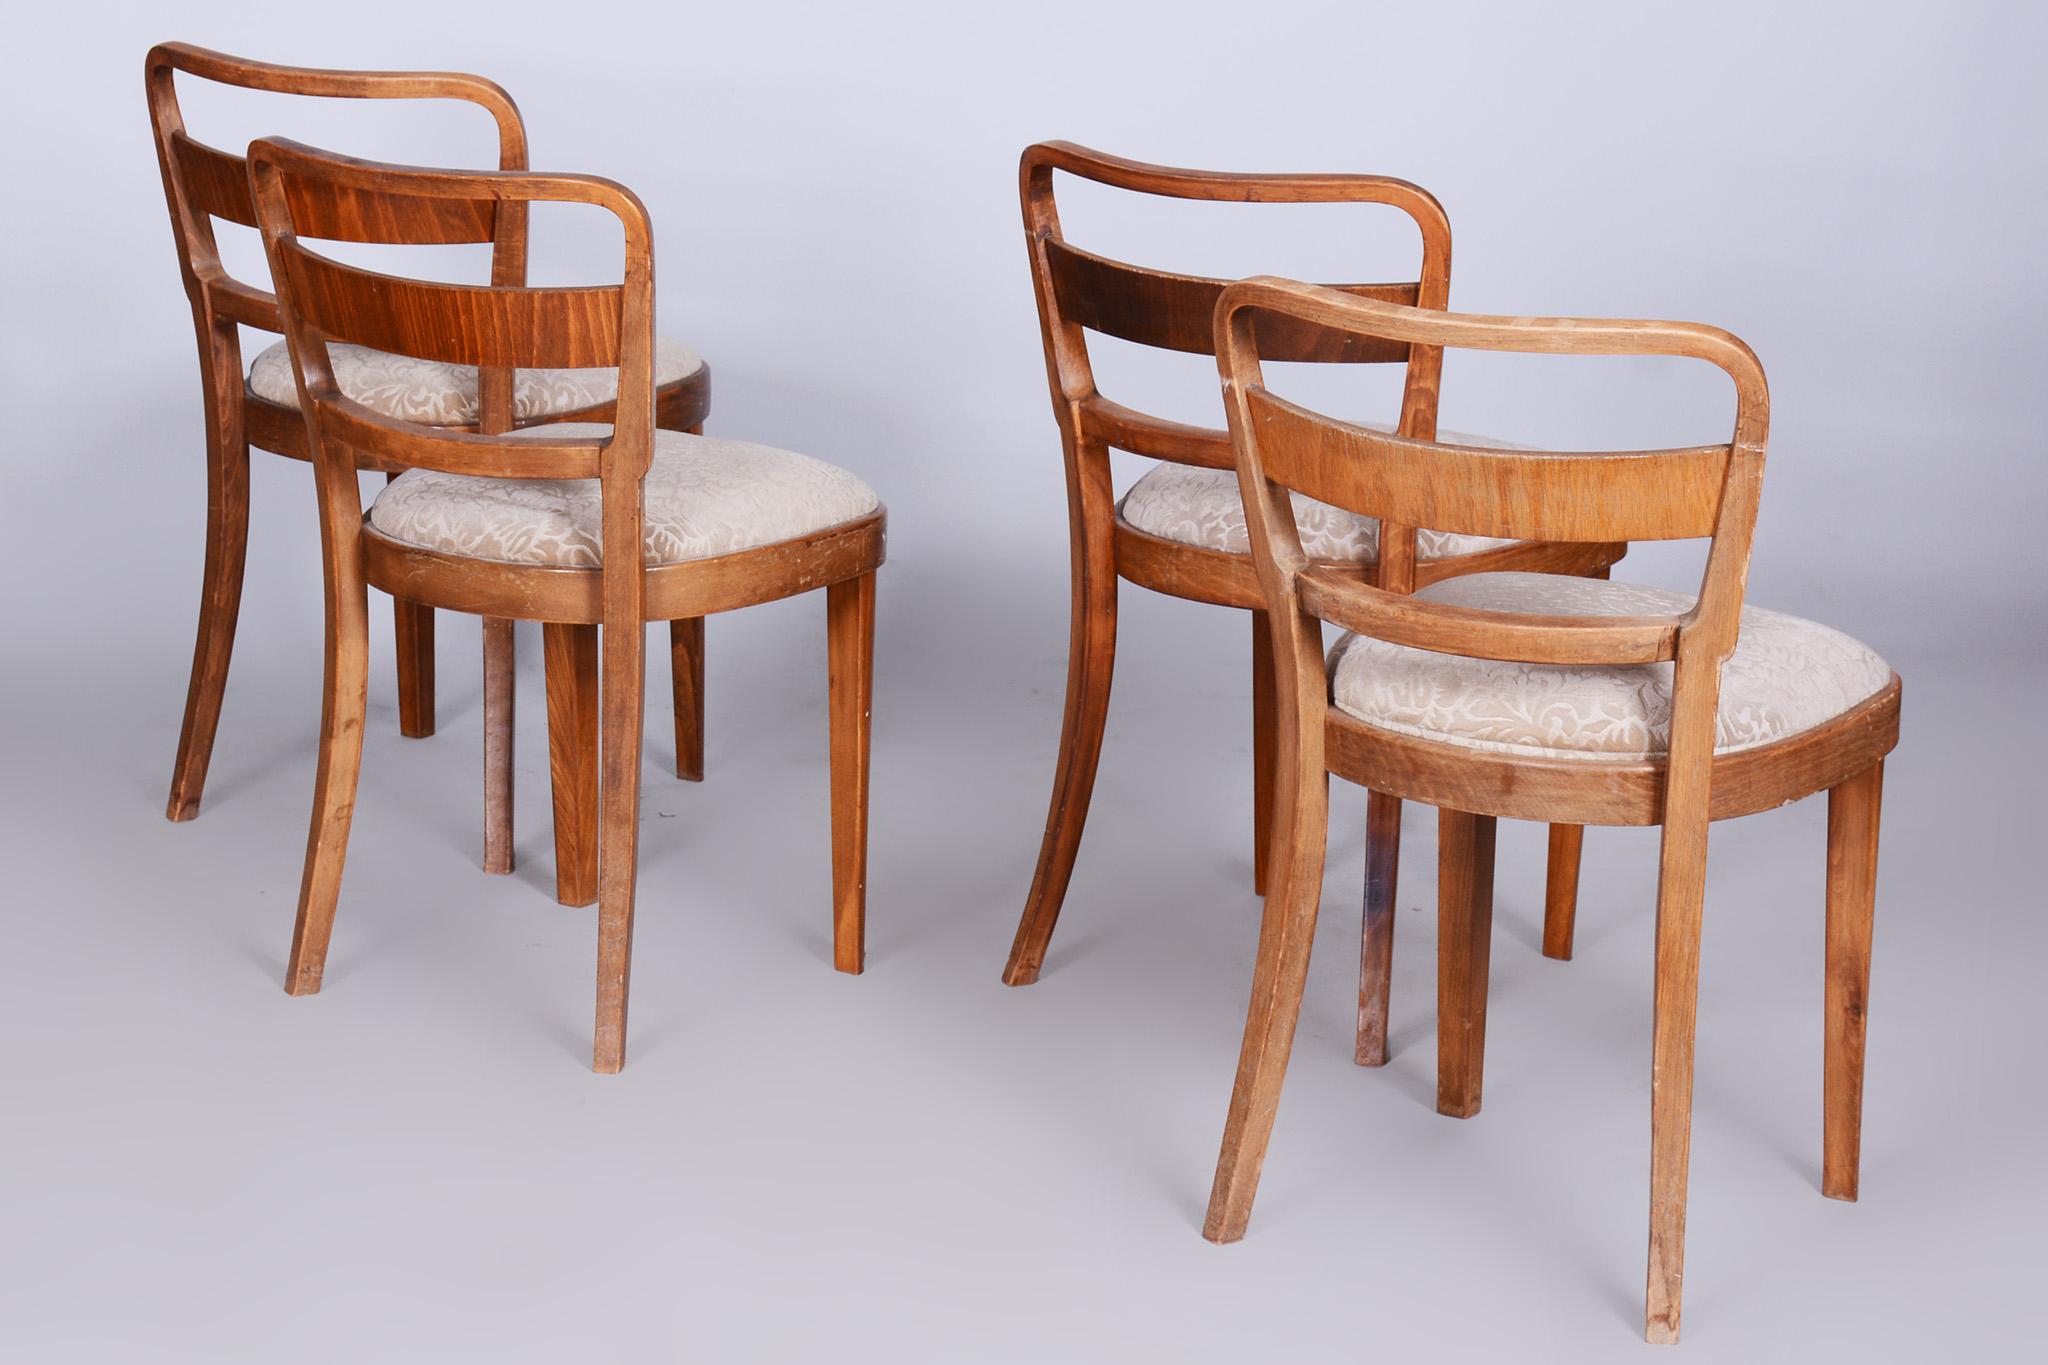 Set of Four Original Art Deco Chairs, Beech and Walnut, Thonet, Czechia, 1930s 2